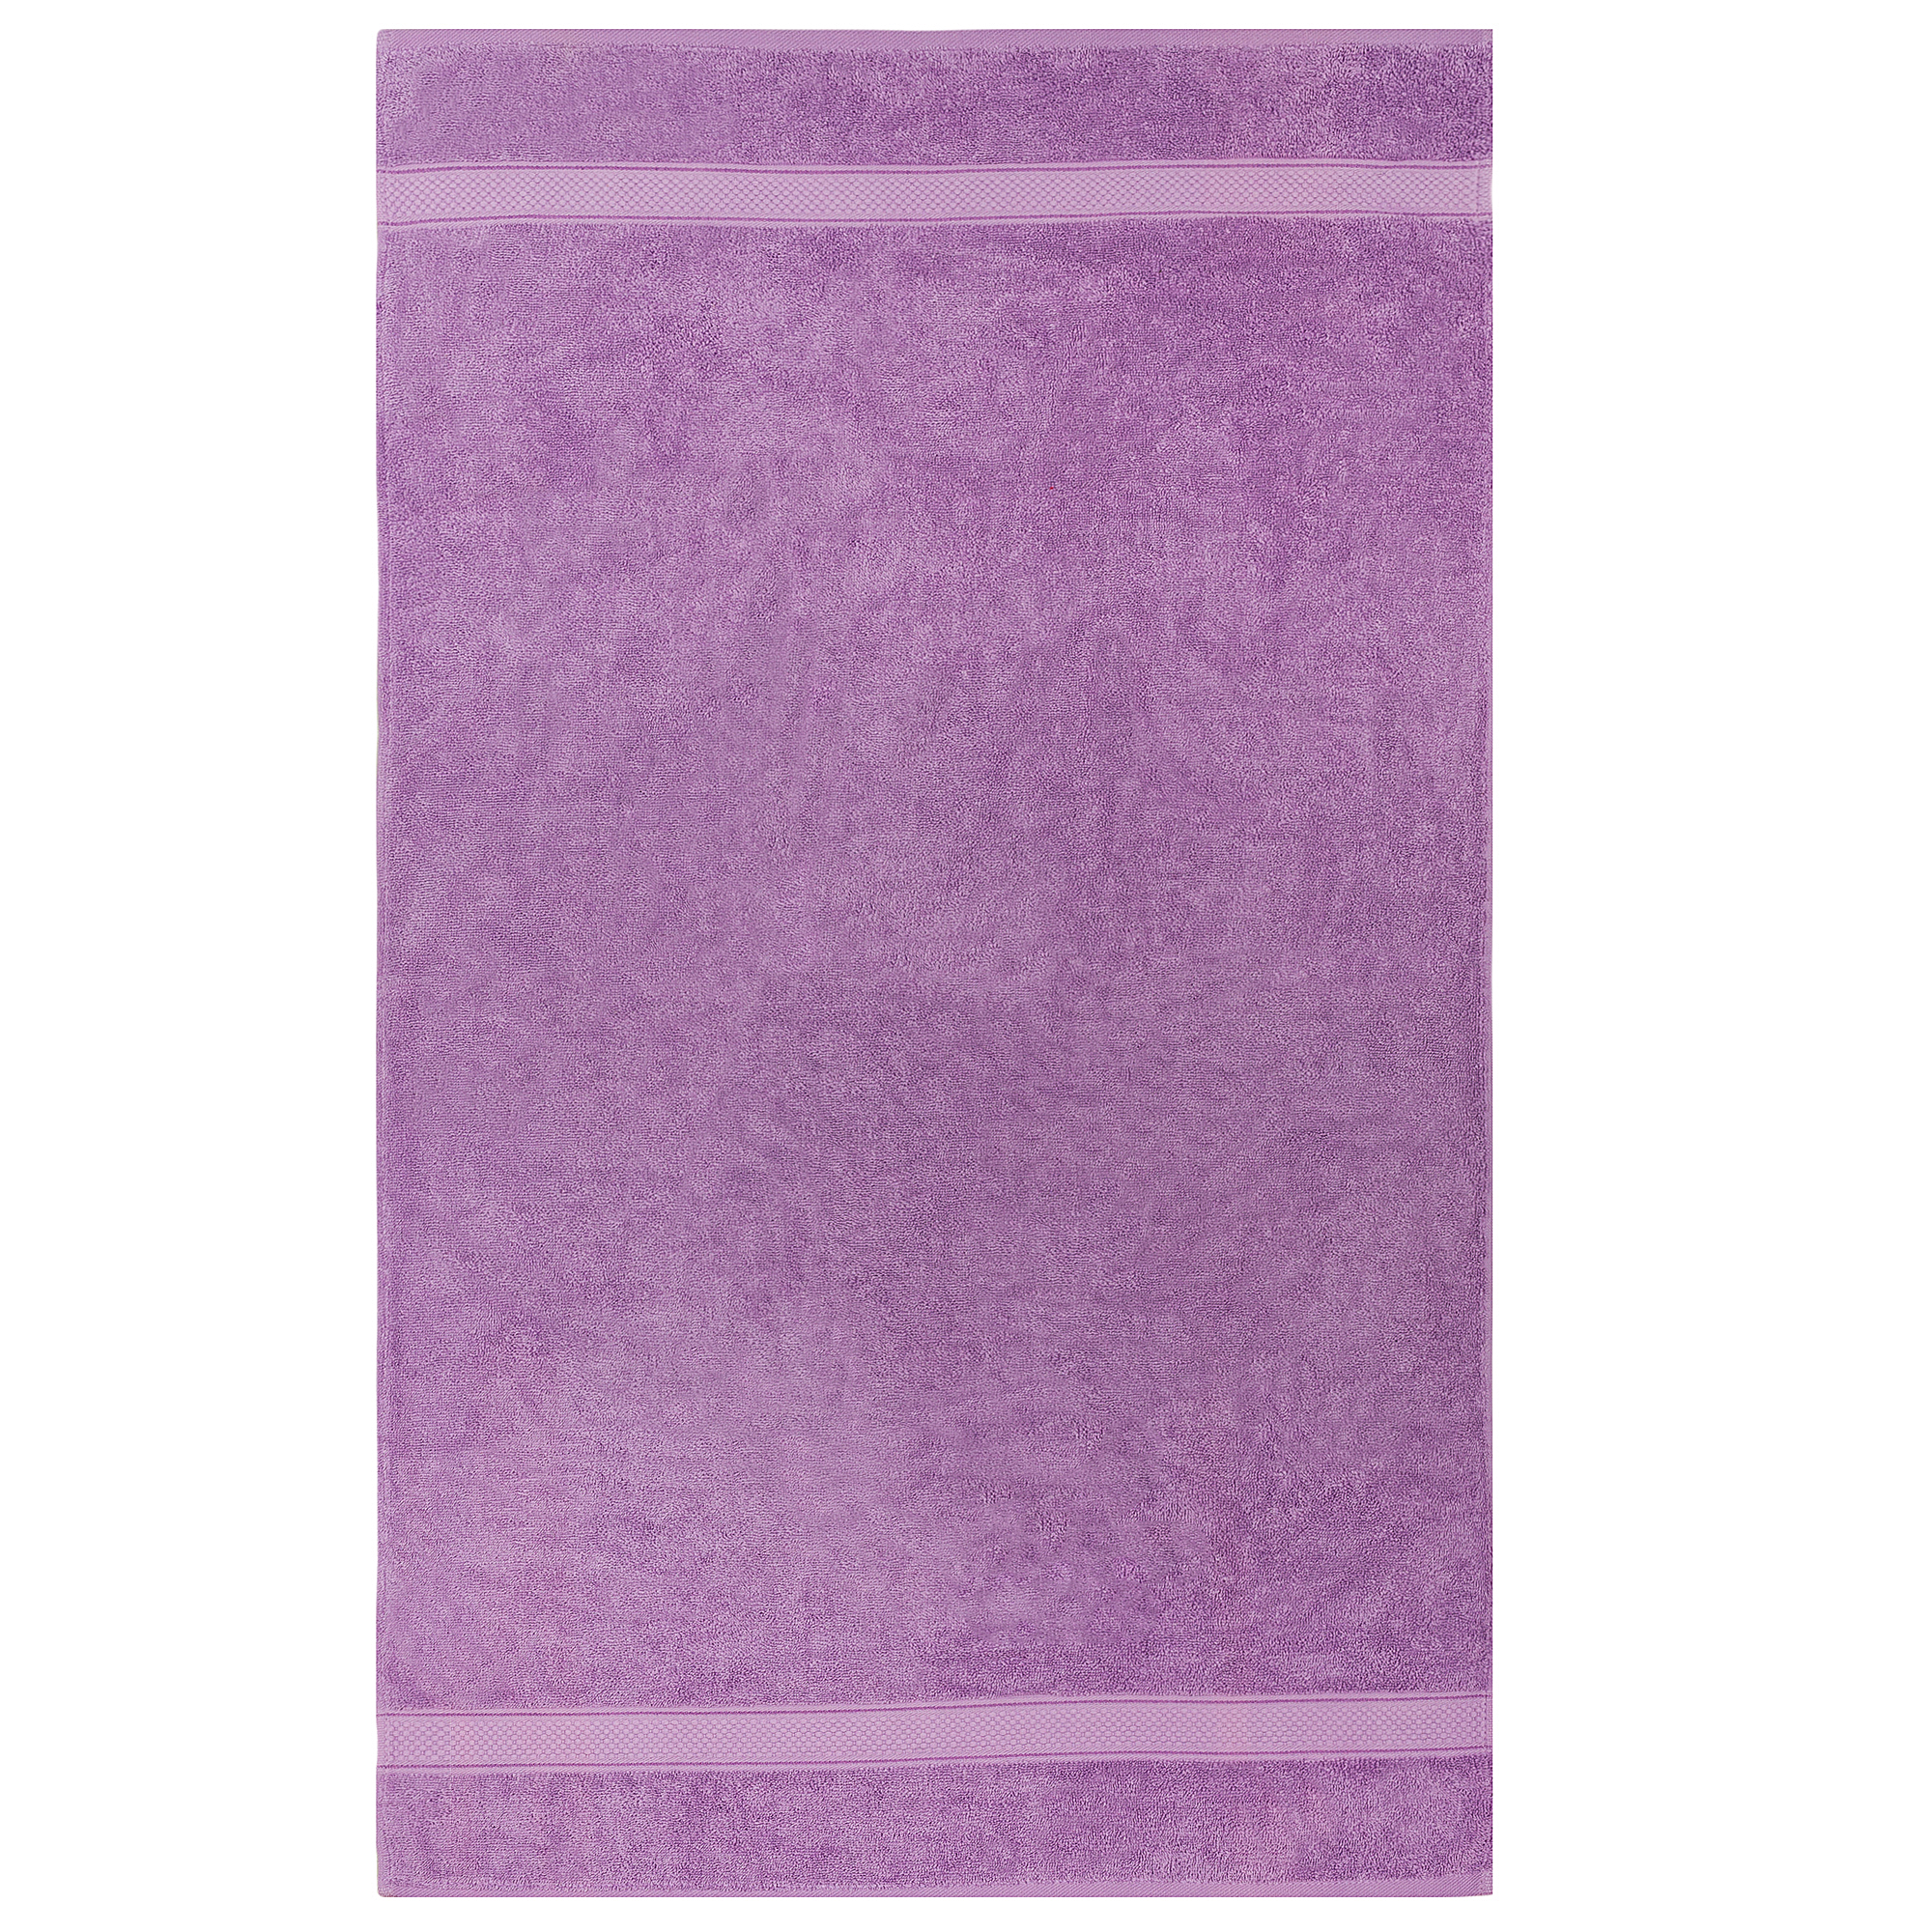 Bale Set 2pcs Lilac Plain Bath Towel